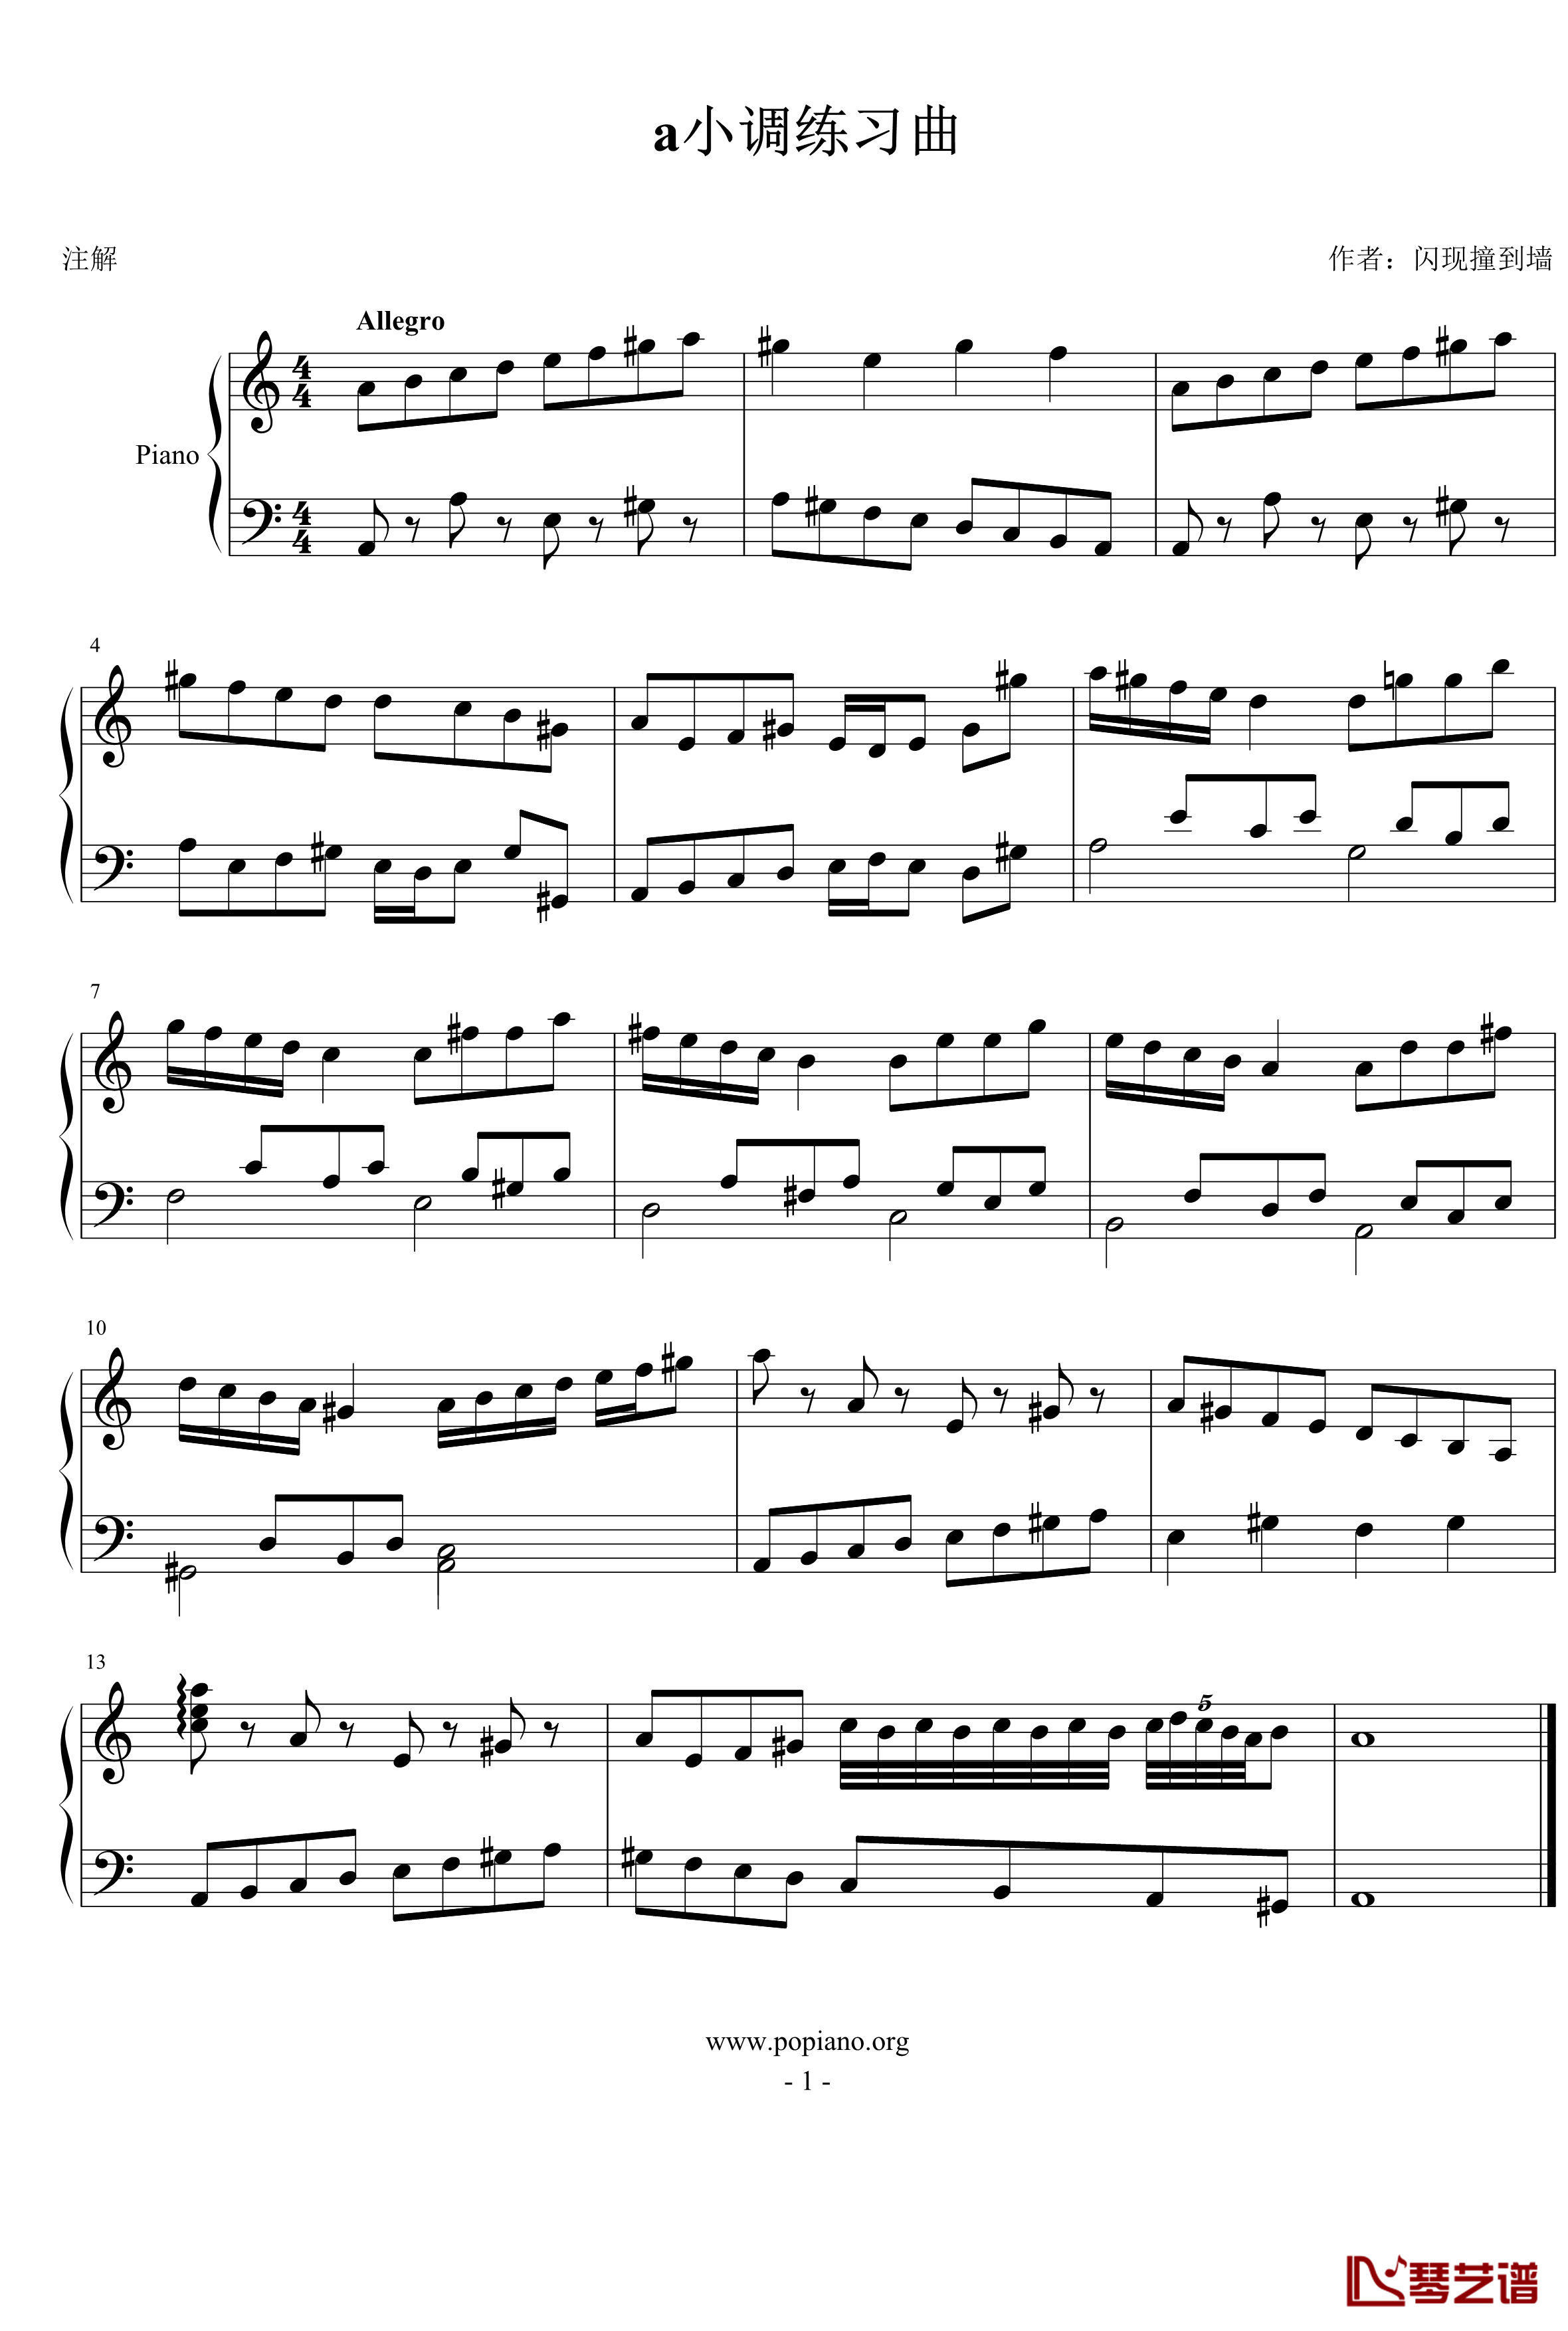 a小调练习曲钢琴谱-zhangjie012347